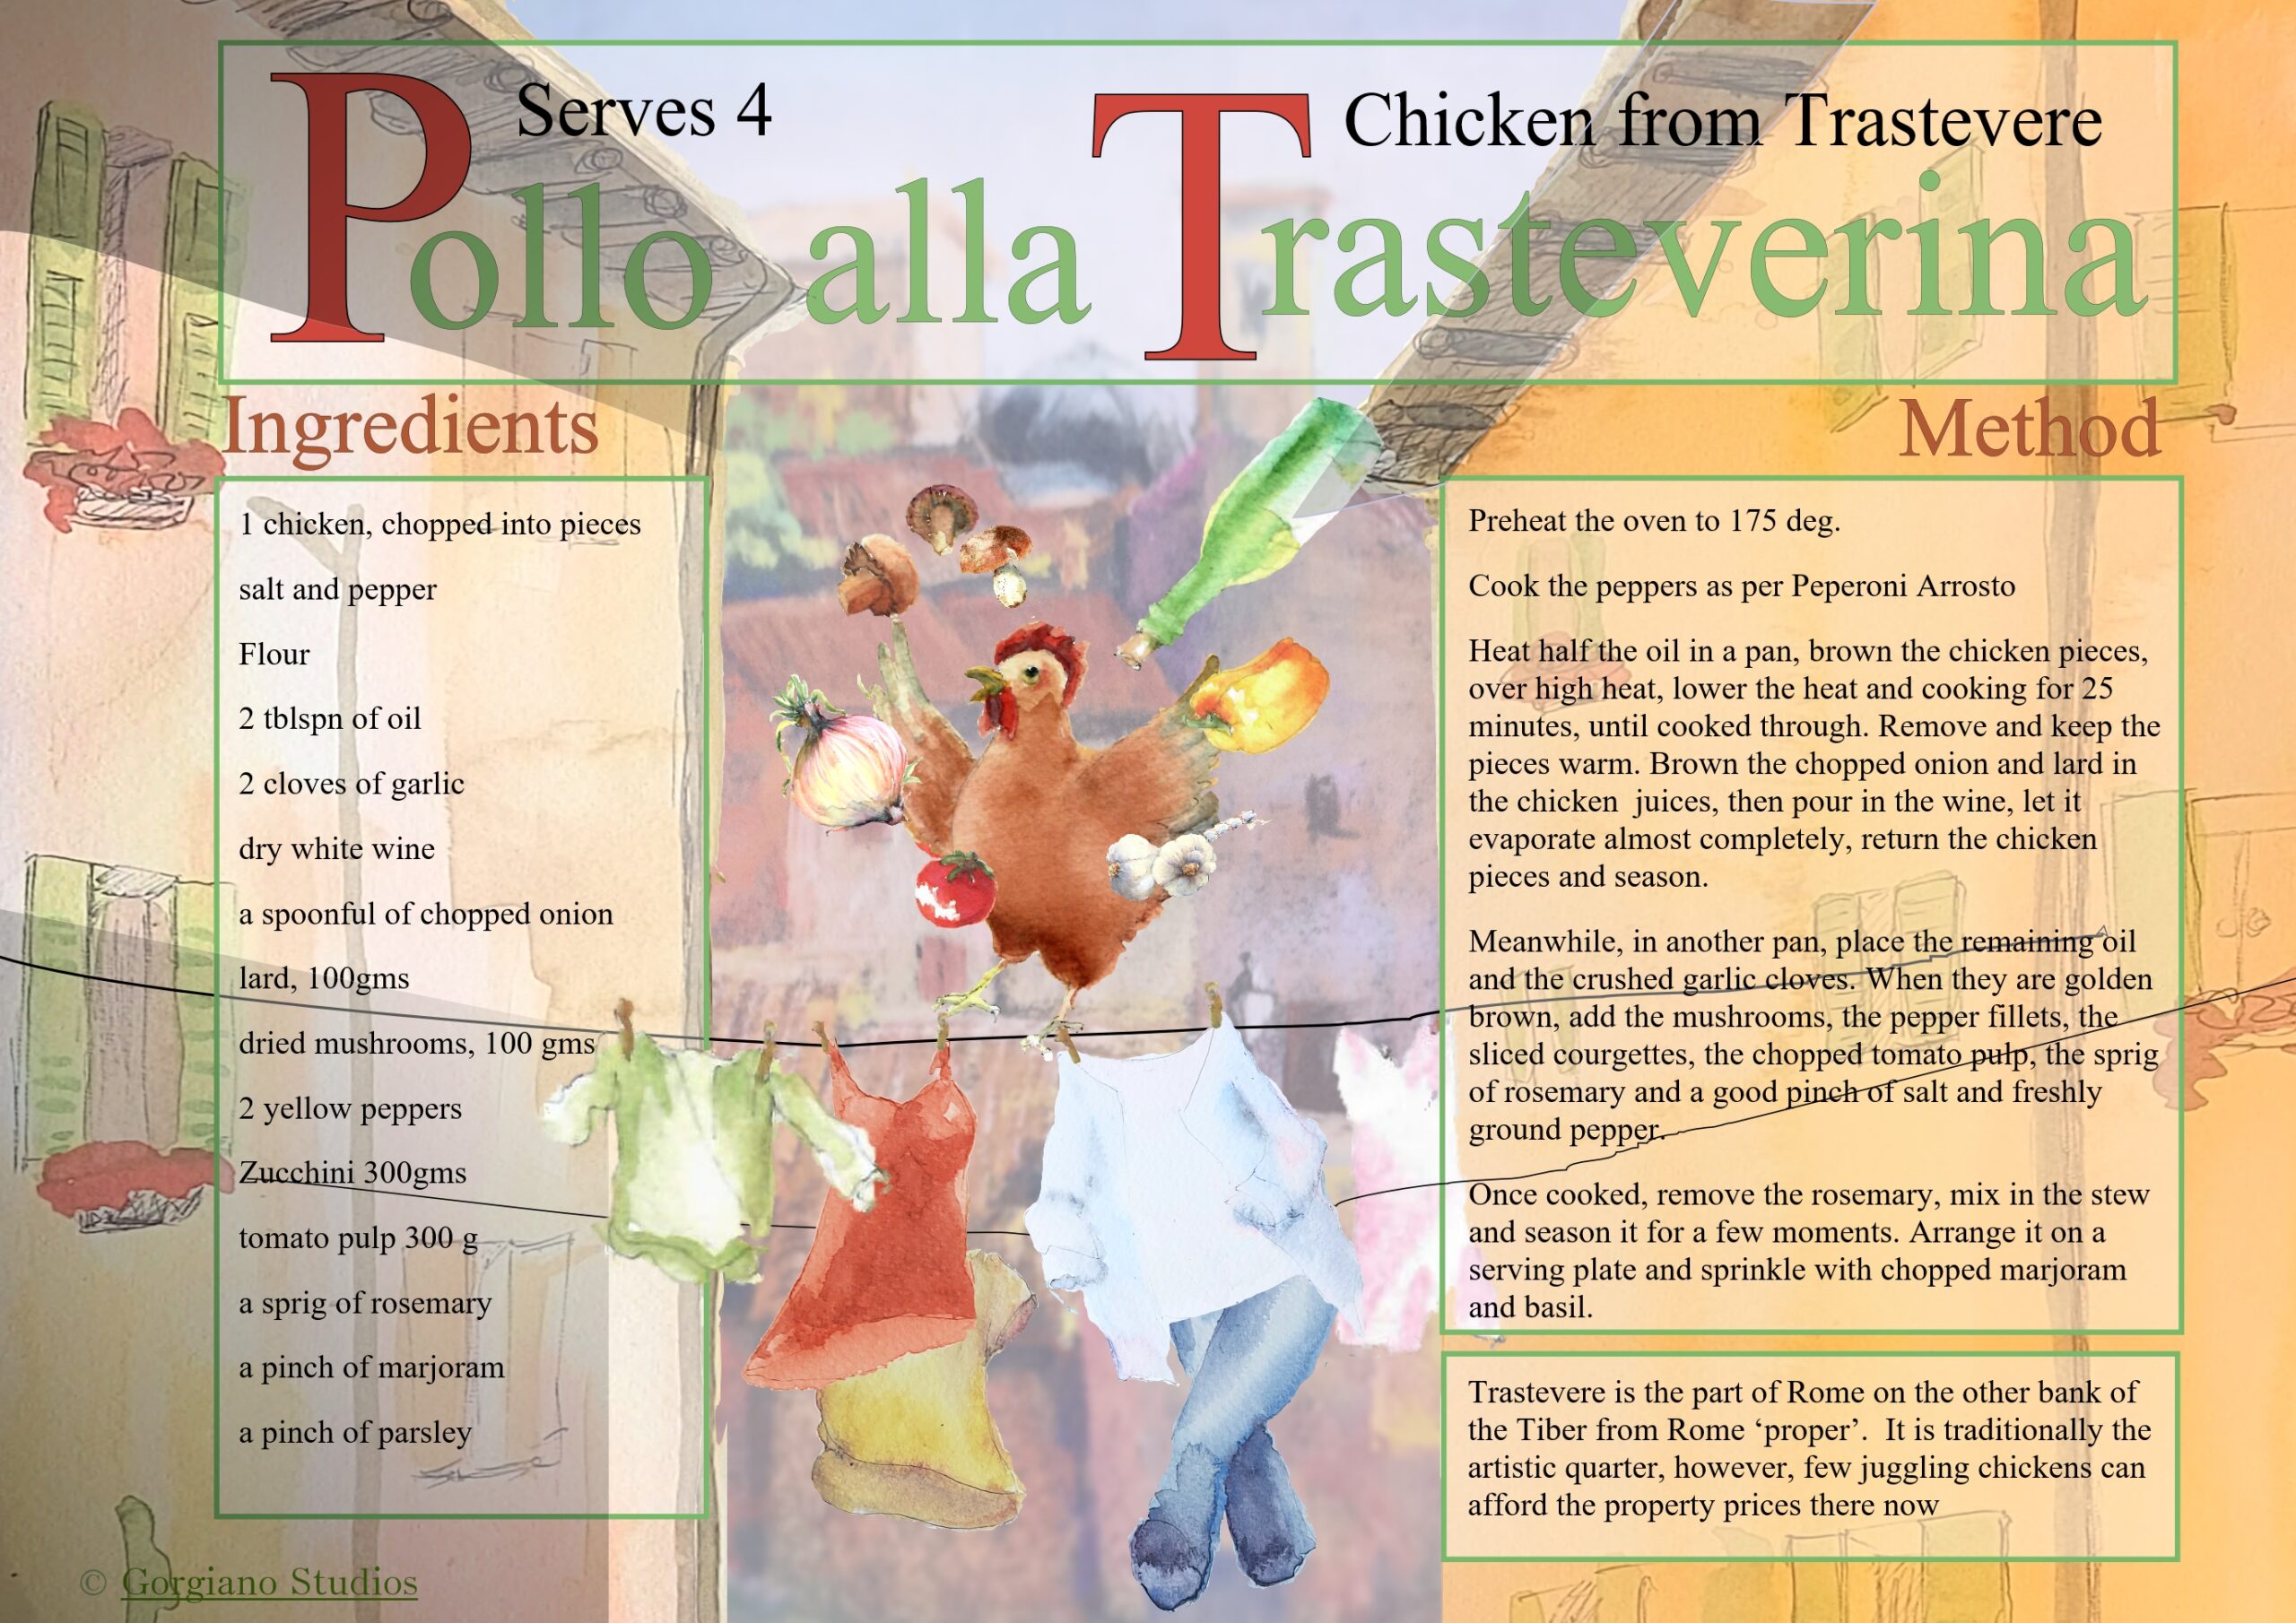 Pollo alla Trasteverina, Gorgiano Recipe card